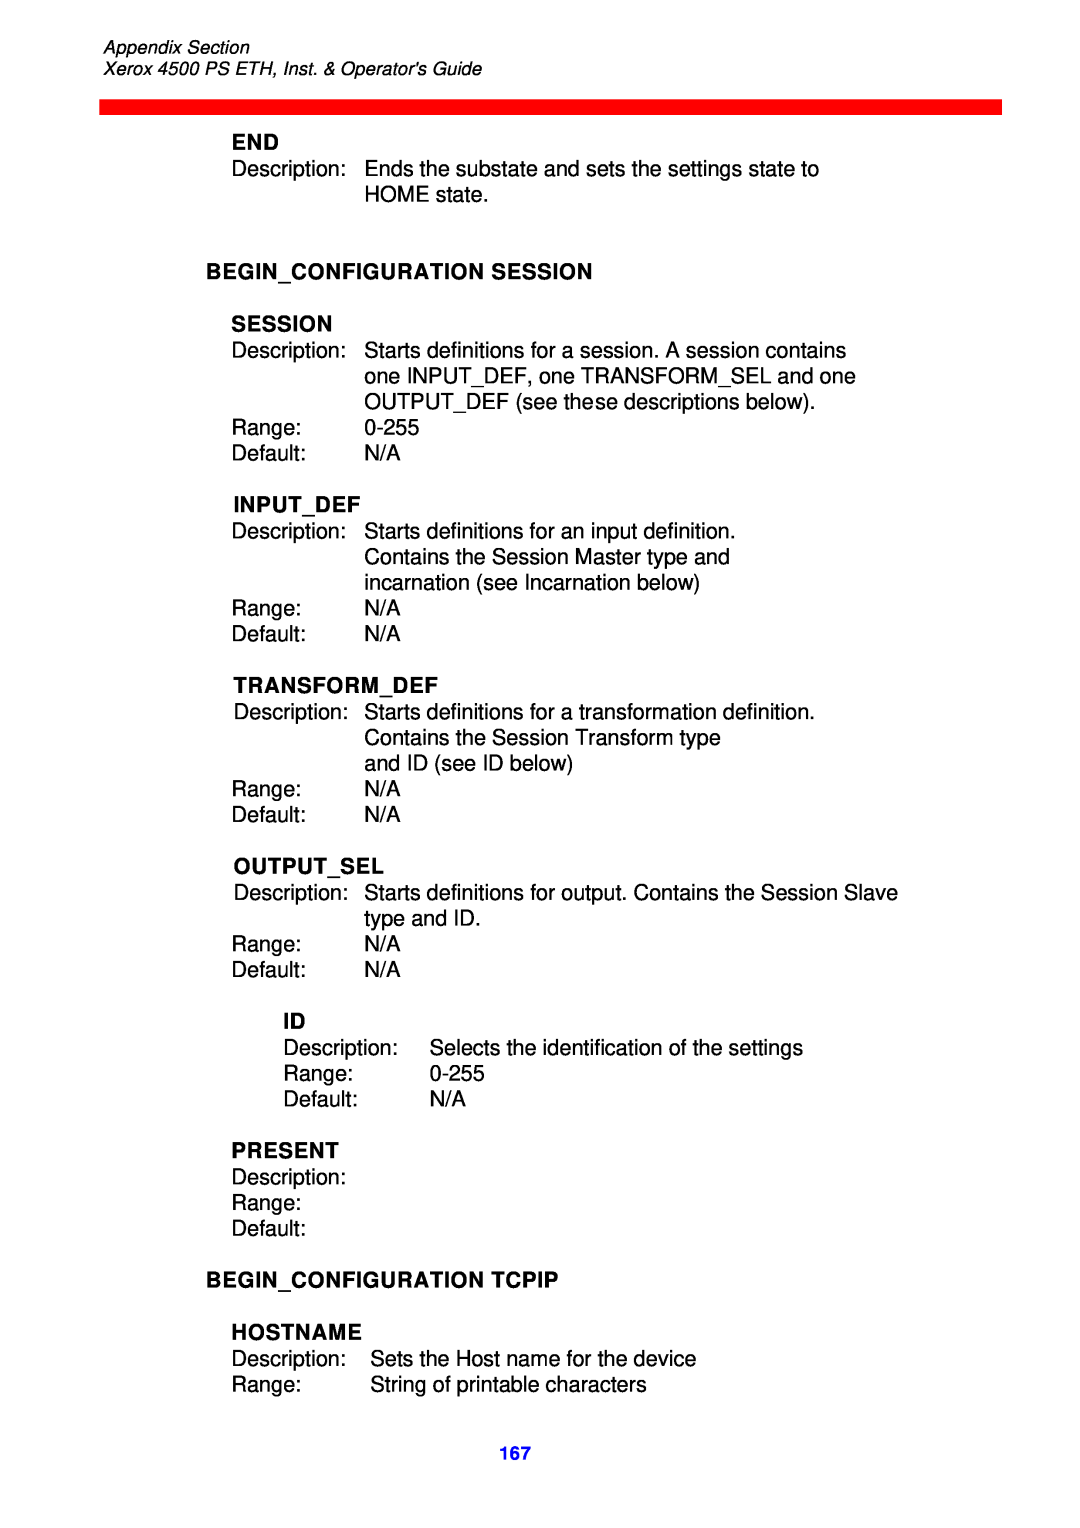 Xerox 4500 ps eth Beginconfiguration Session Session, Inputdef, Transformdef, Outputsel, Present, Beginconfiguration Tcpip 